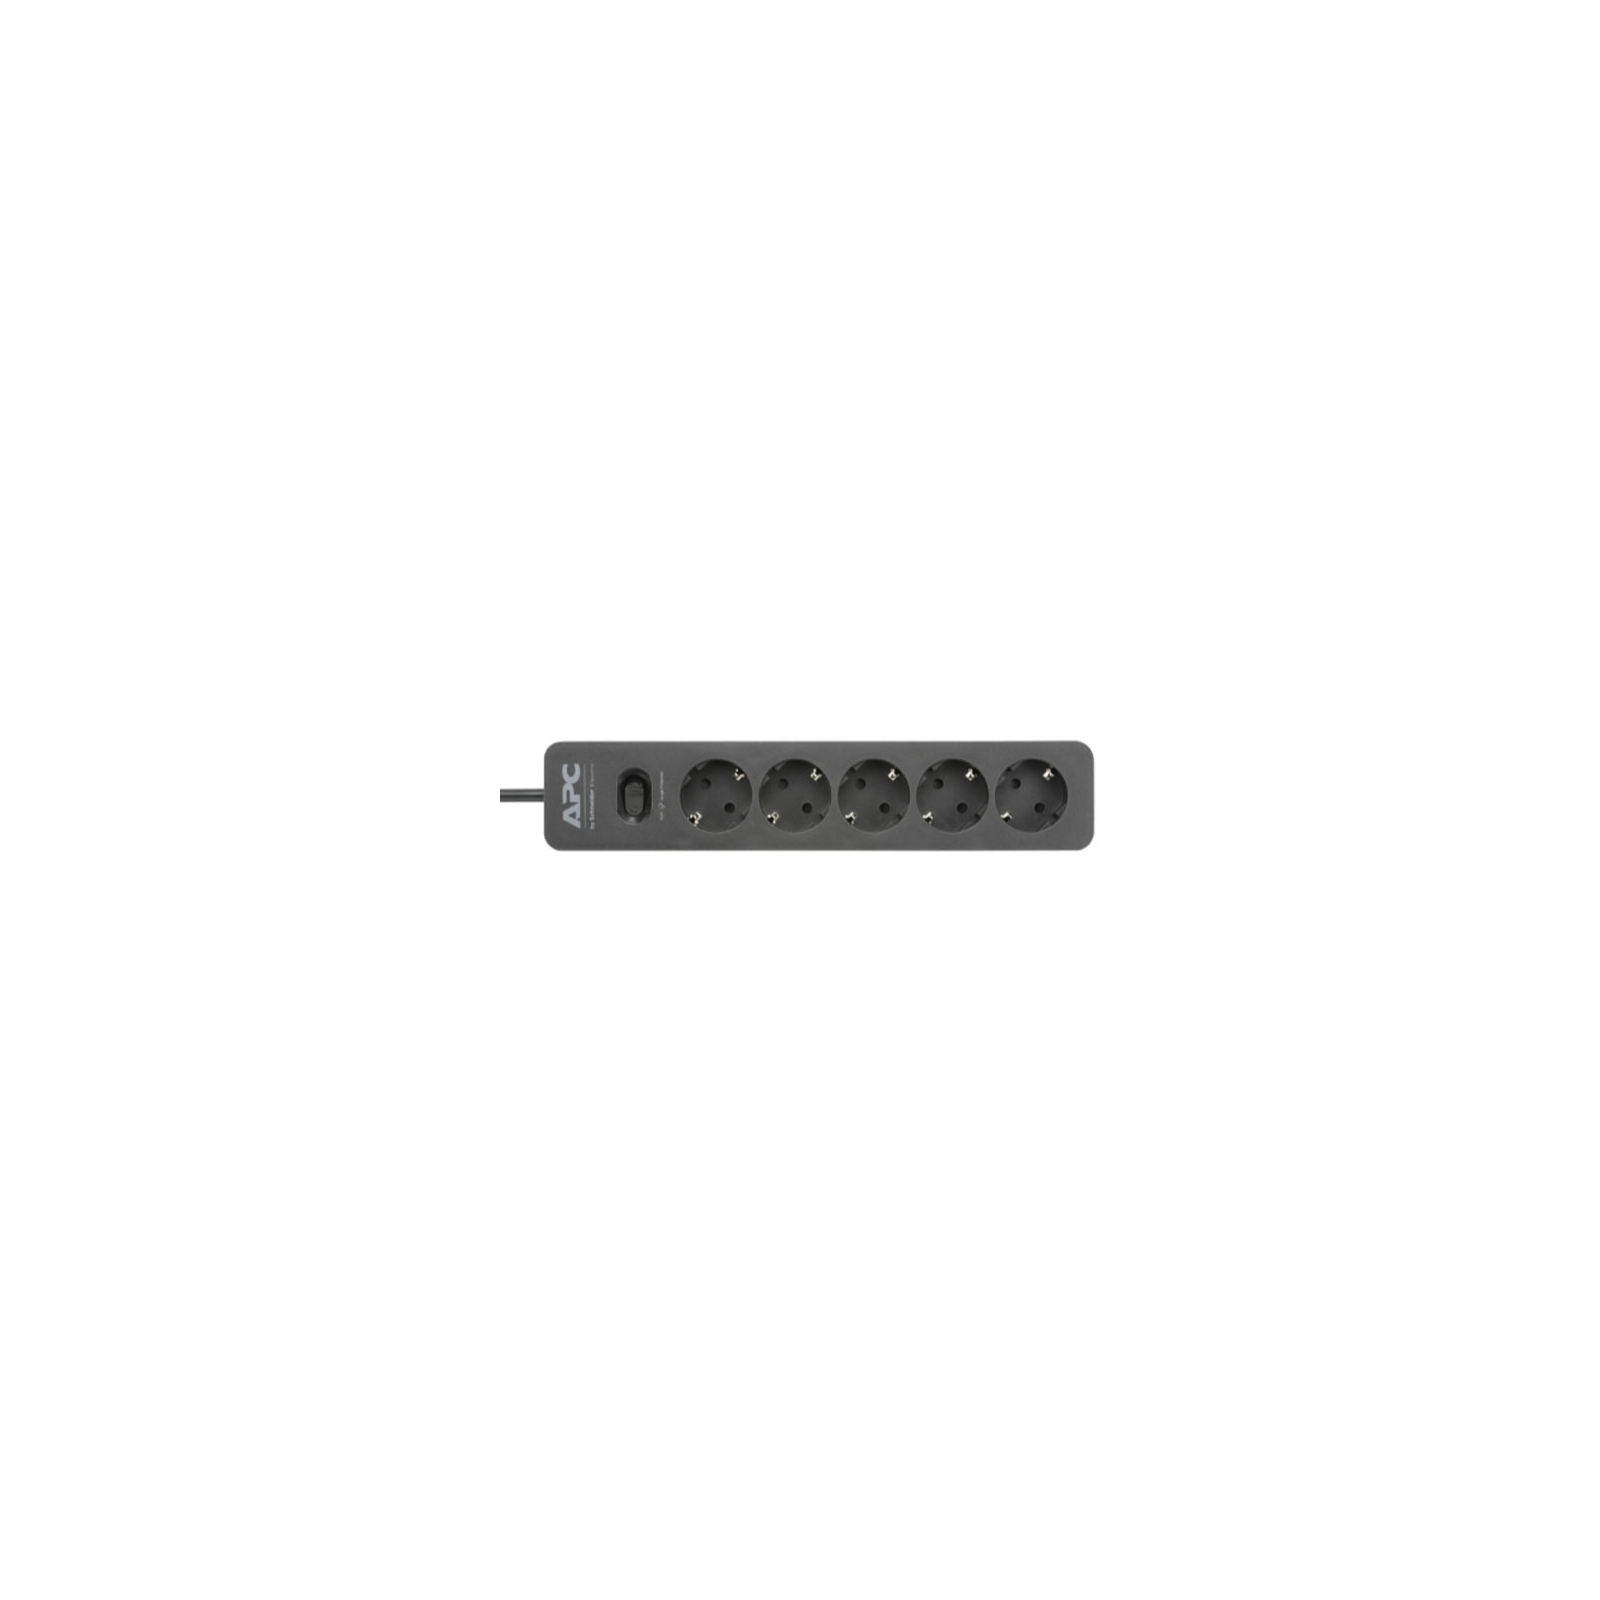 Сетевой фильтр питания APC Essential SurgeArrest 5 Outlet PME5B-RS (PME5B-RS) изображение 3